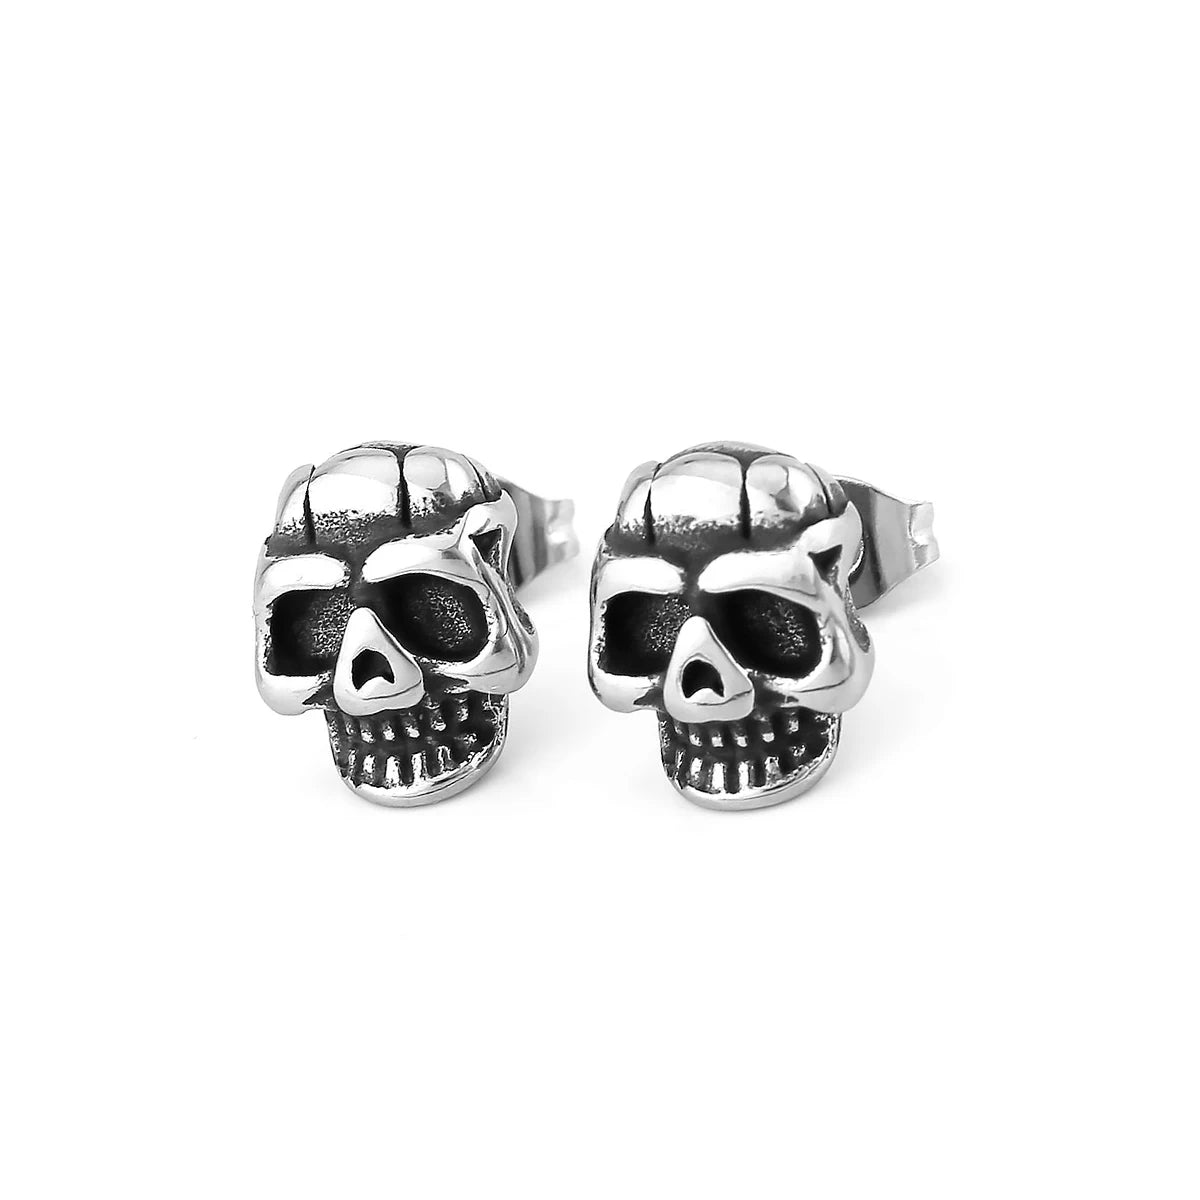 Viking New and Cool Fashion Punk Skull Stud Earrings